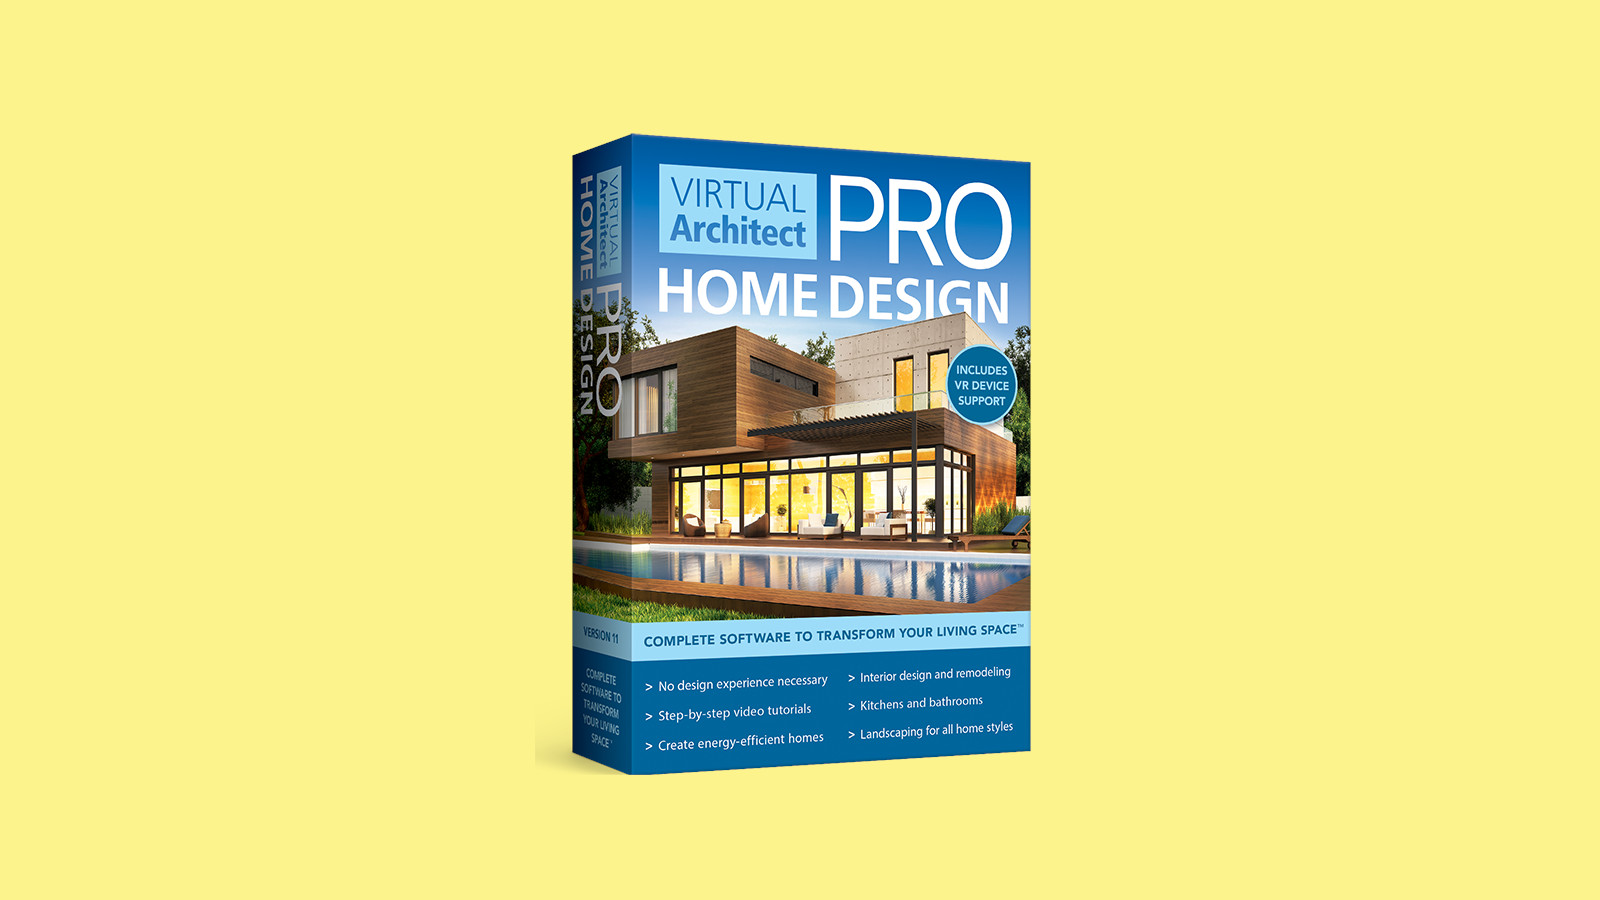 Virtual Architect Professional Home Design 11 CD Key 258.03 $